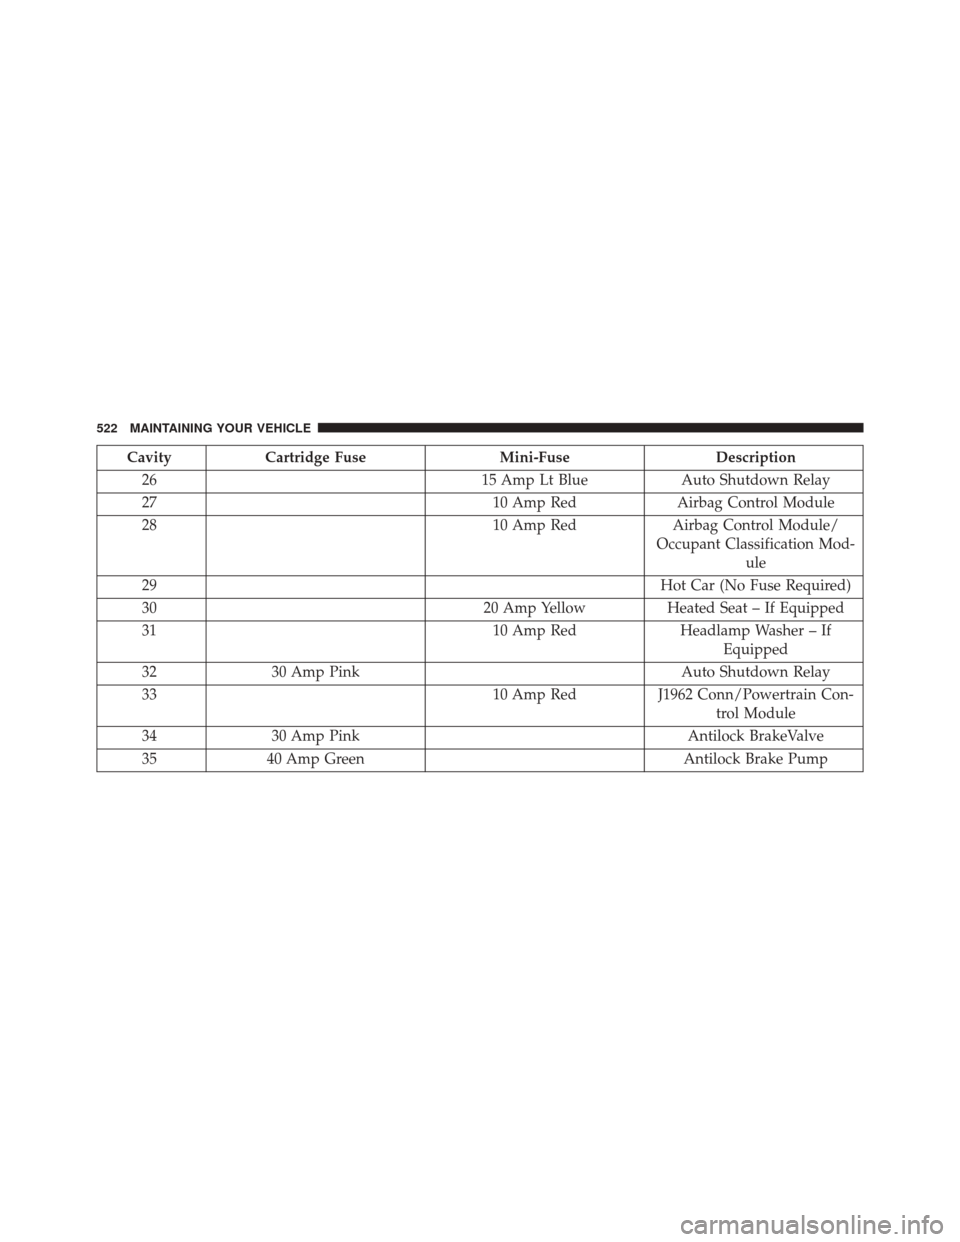 JEEP COMPASS 2014 1.G Owners Manual CavityCartridge Fuse Mini-FuseDescription
26 15 Amp Lt BlueAuto Shutdown Relay
27 10 Amp RedAirbag Control Module
28 10 Amp RedAirbag Control Module/
Occupant Classification Mod- ule
29 Hot Car (No Fu